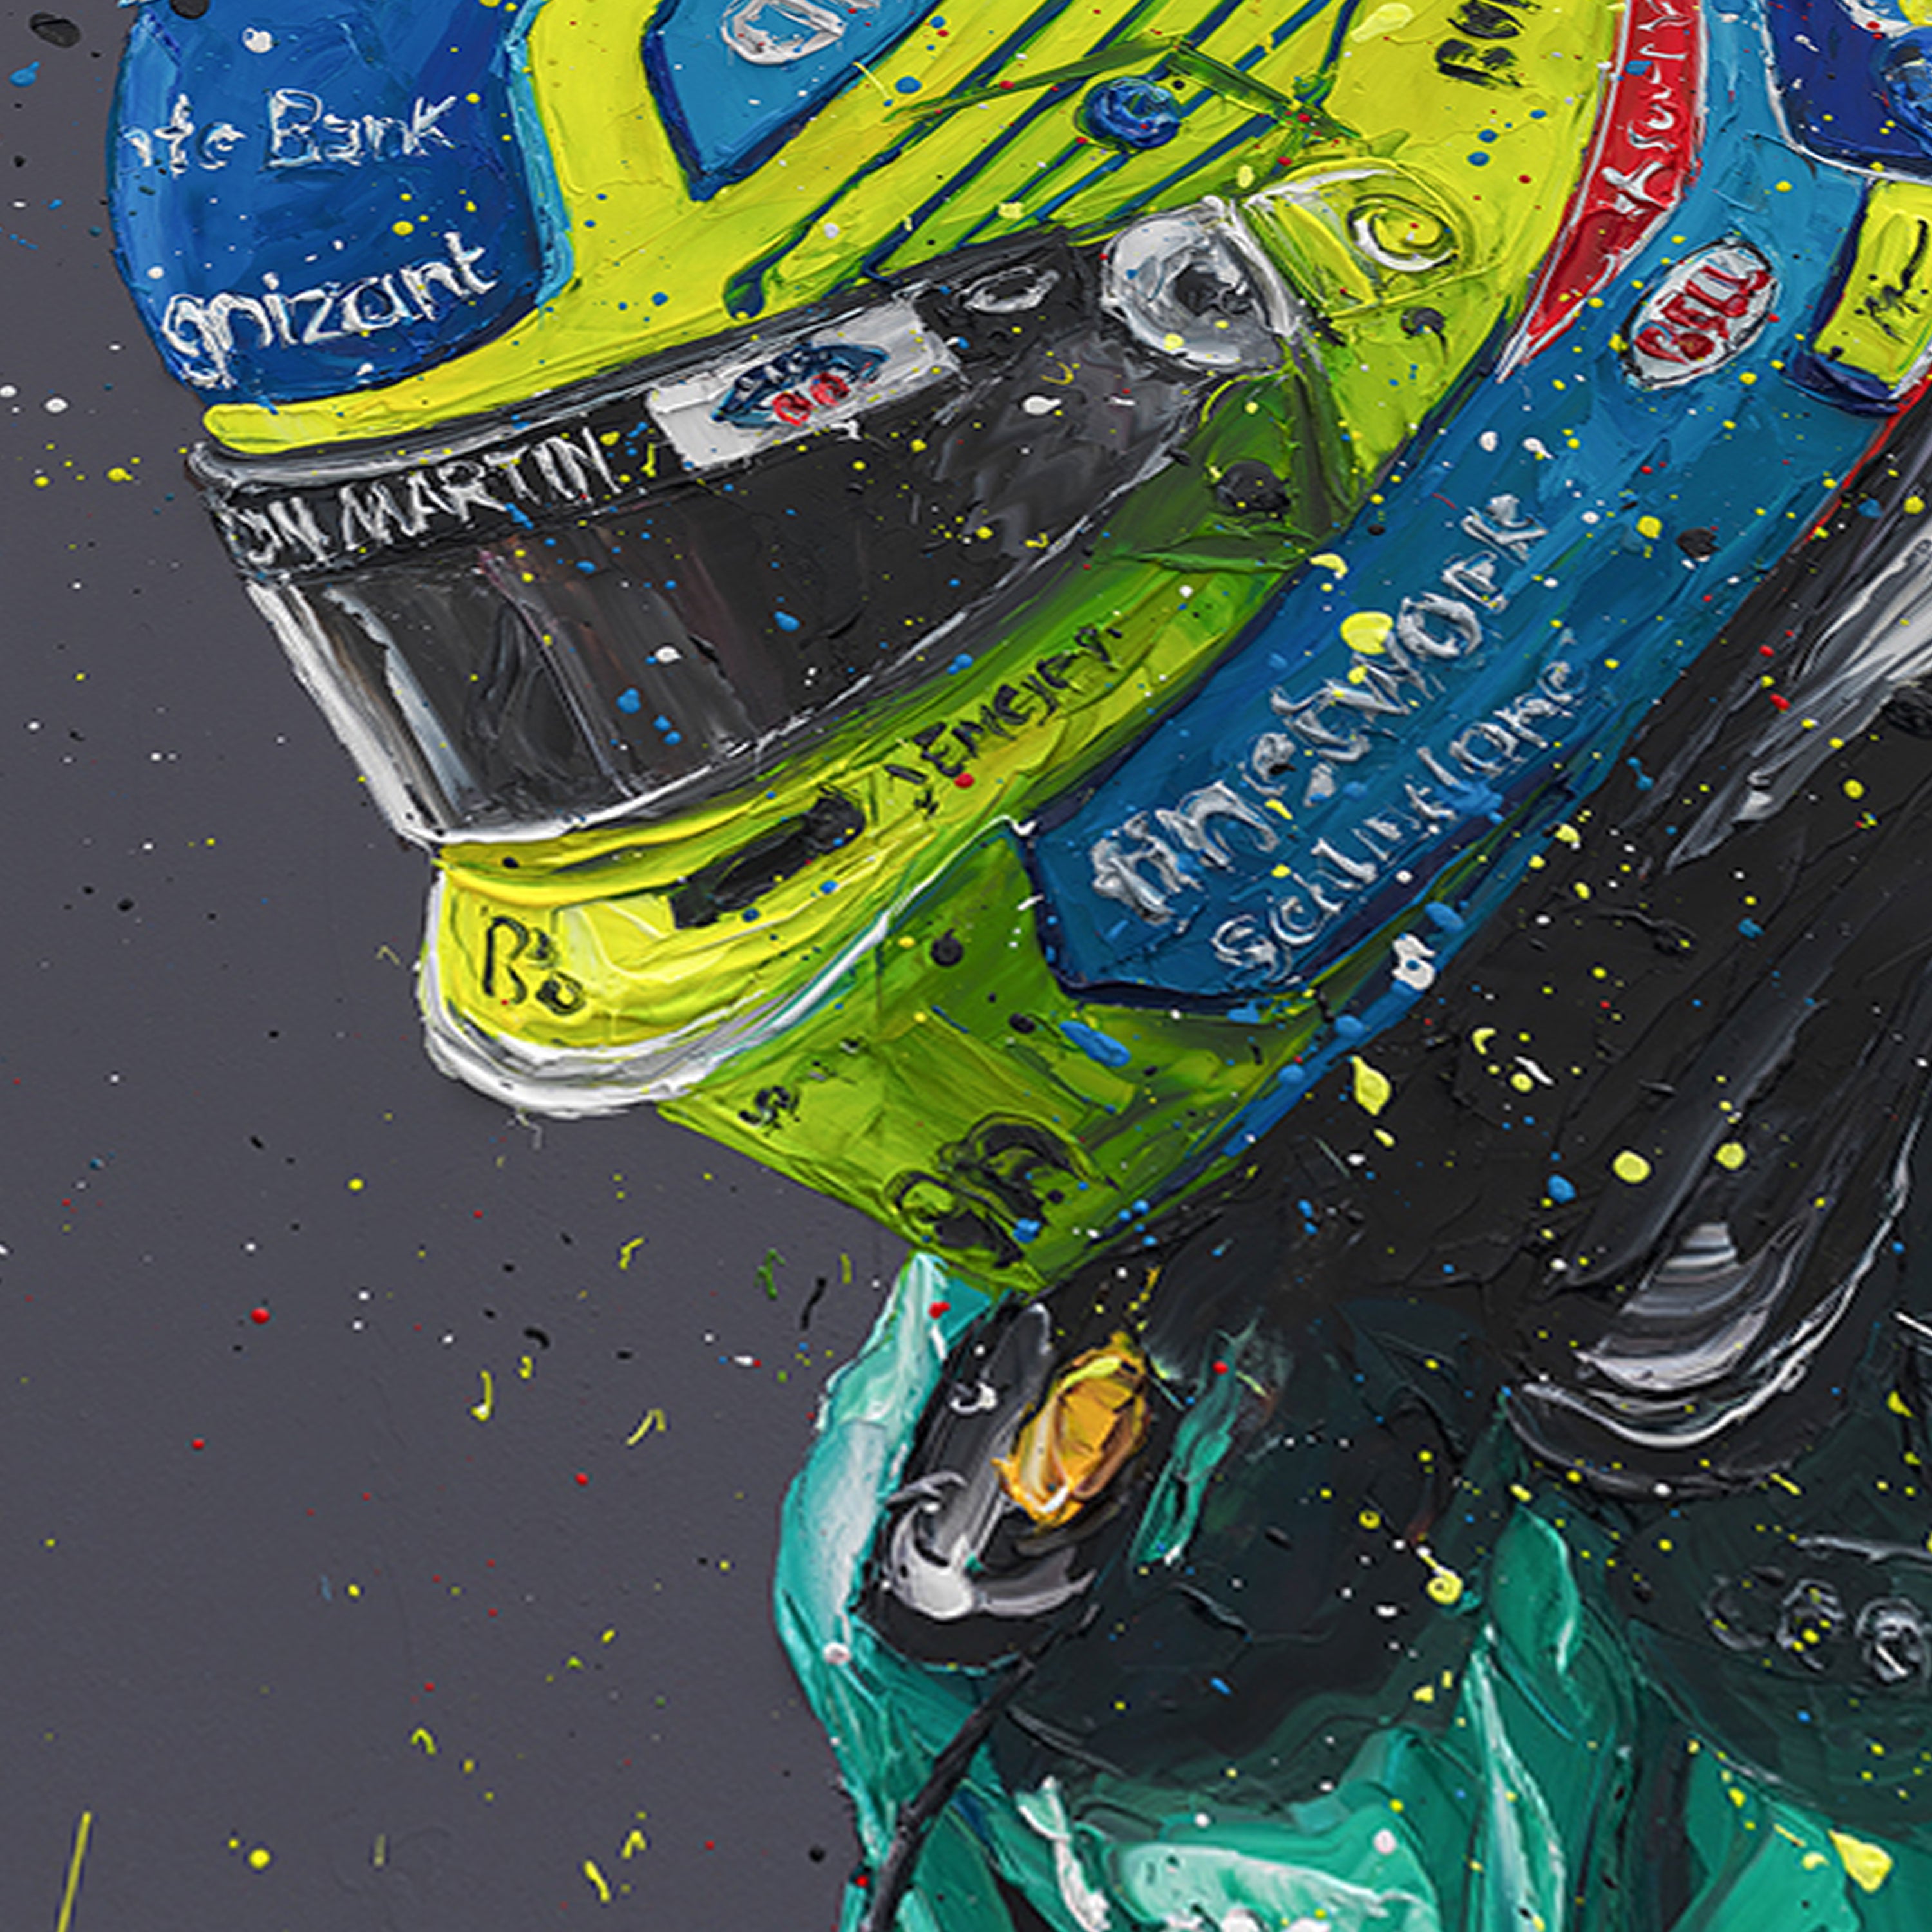 Fernando Alonso Hand Embellished Portrait Print – Paul Oz